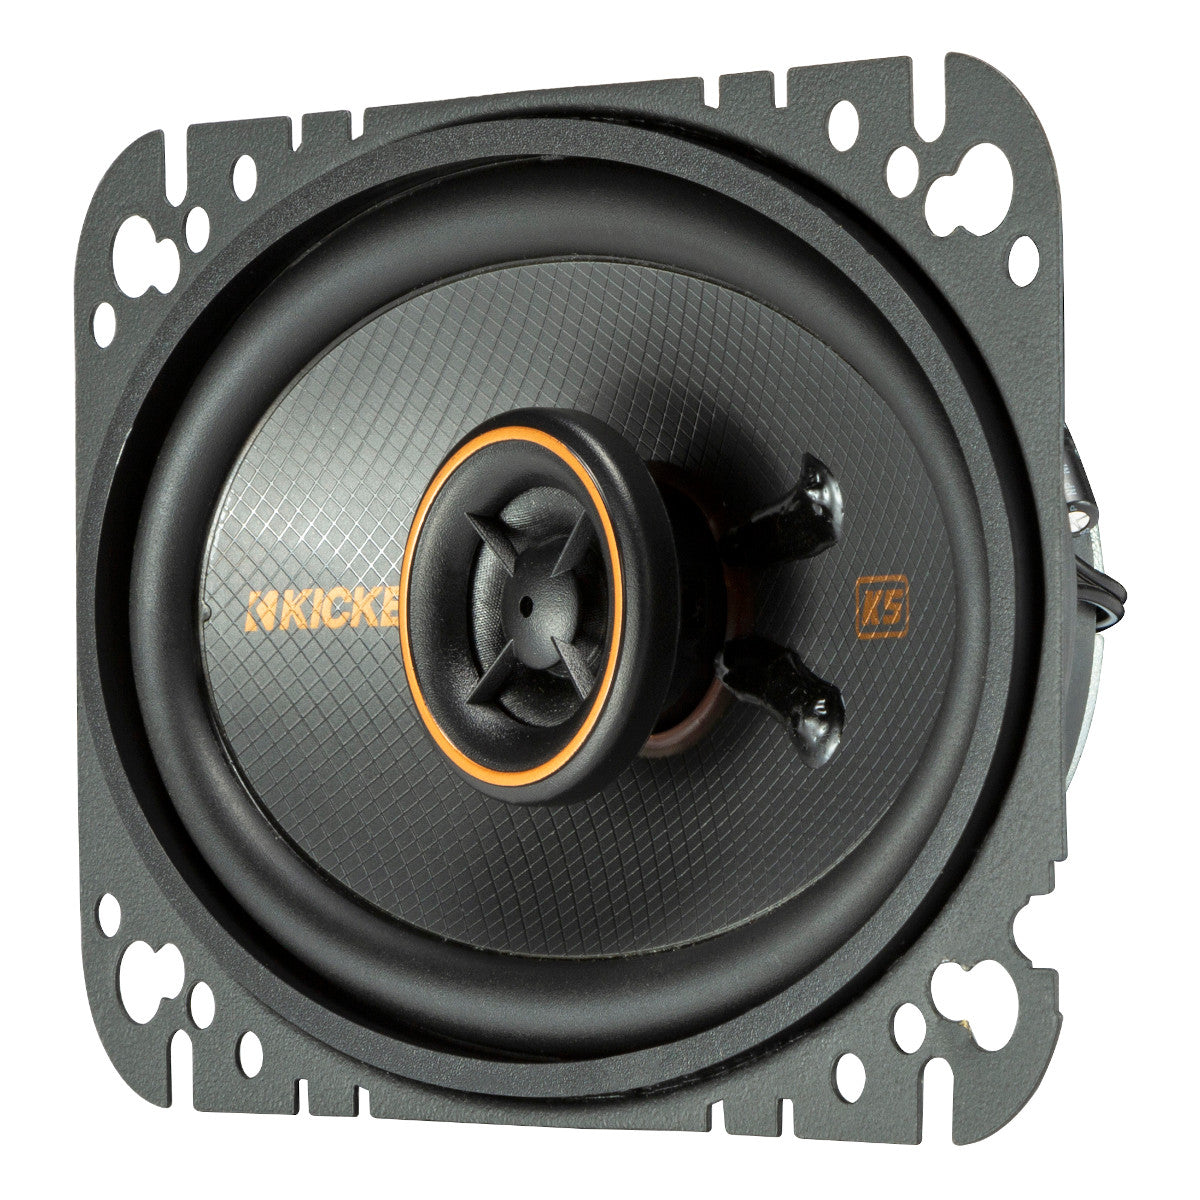 Kicker 47KSC4604 4x6" KS-Series 2-Way Coaxial Speakers - Pair